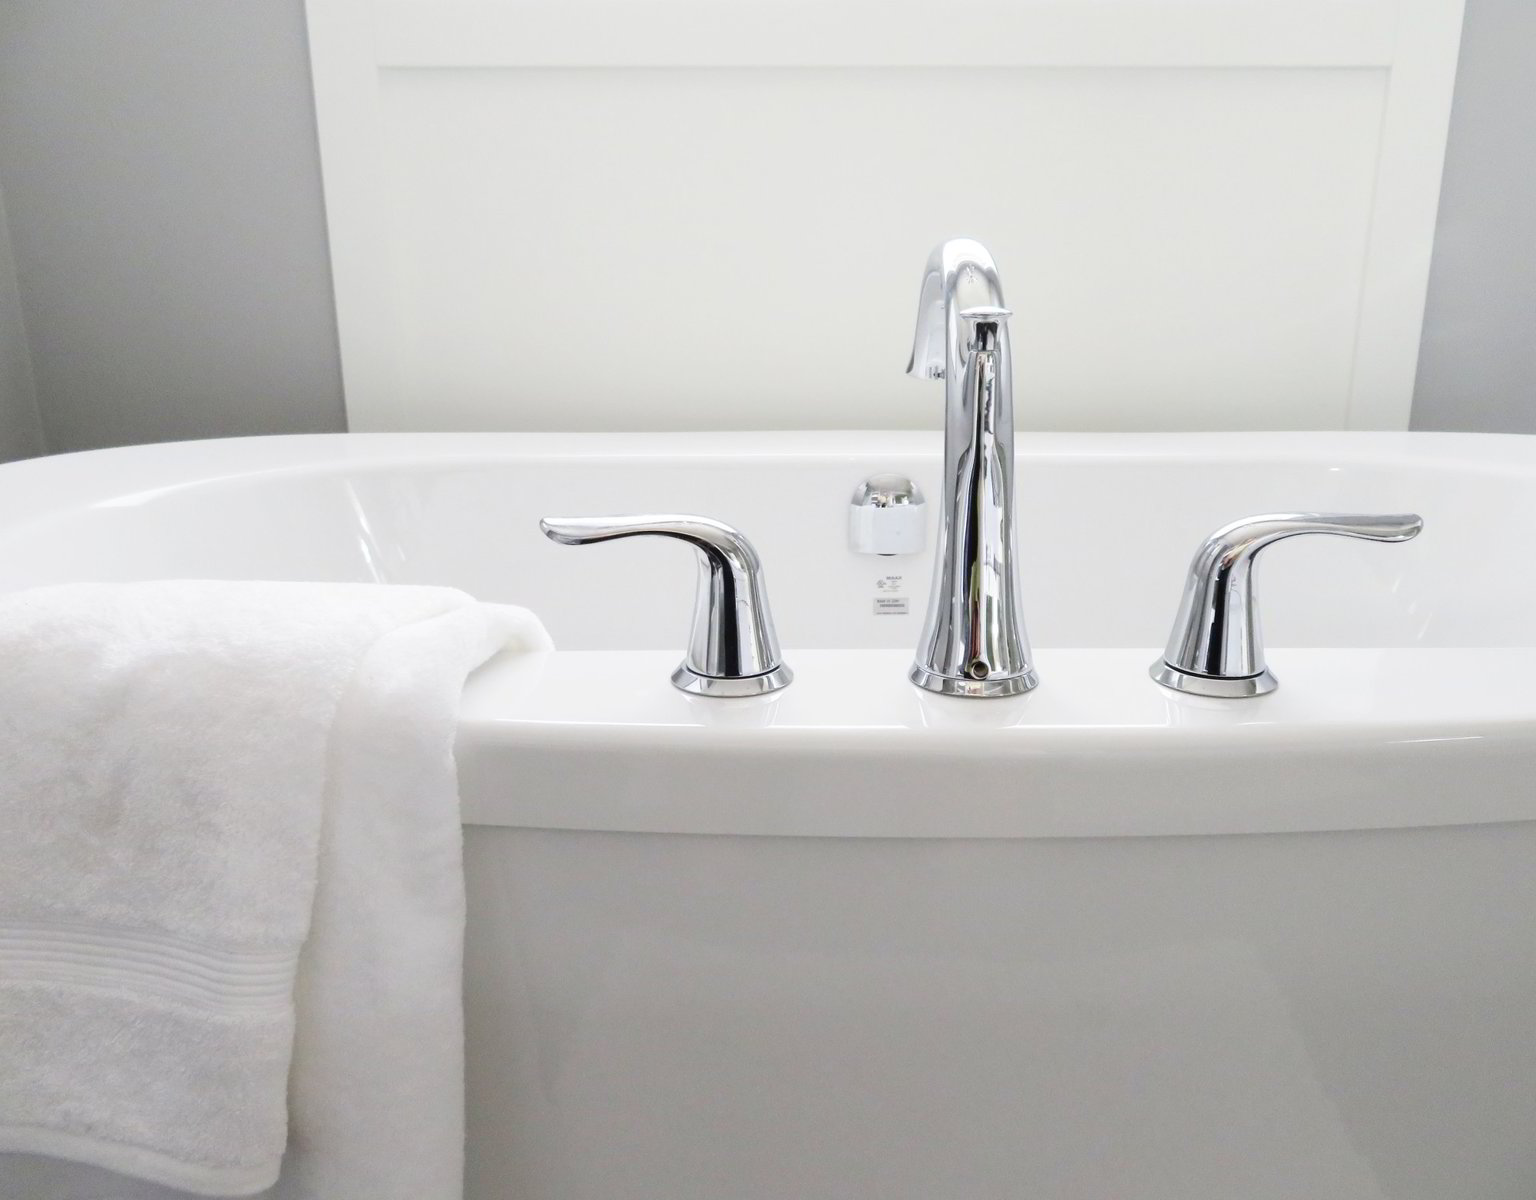 How To Fix A Leaky Bathtub Faucet, How Do I Stop A Leaky Bathtub Faucet